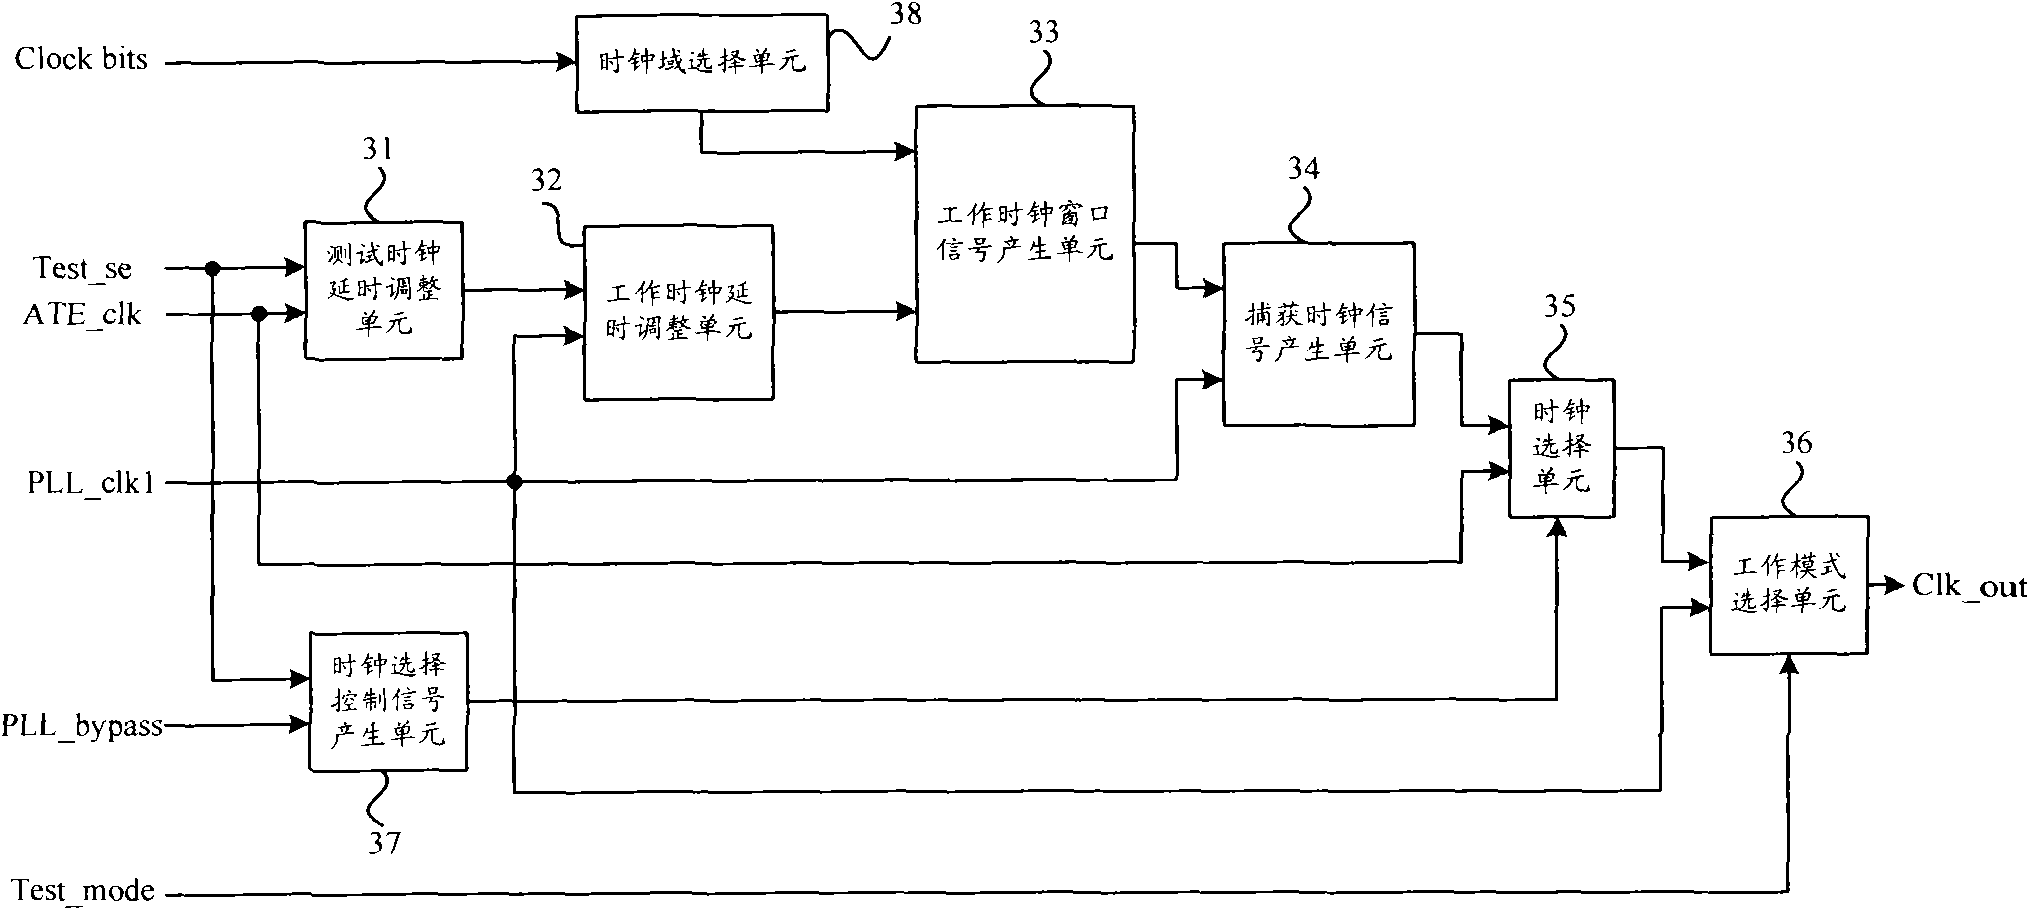 Method and circuit for testing multi-clock domain